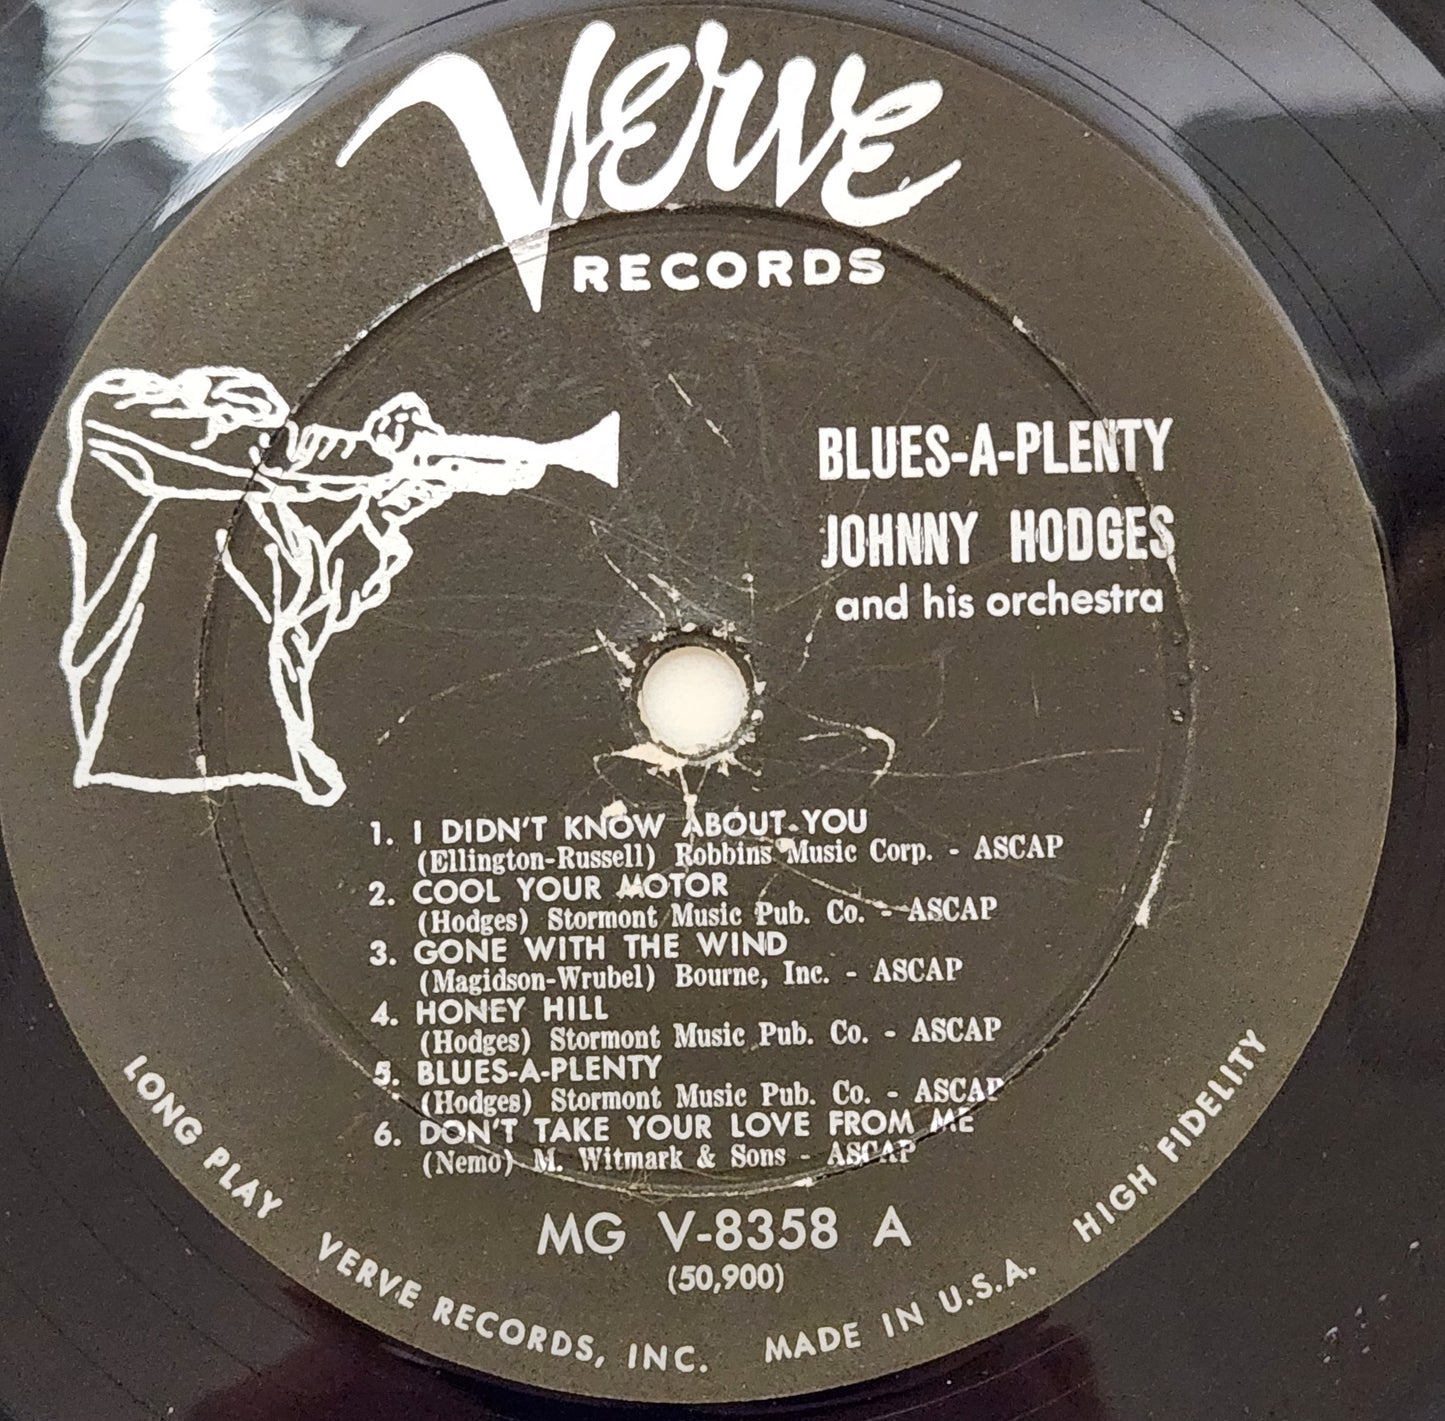 Johnny Hodges & His Orchestra 1958 "Blues-A-Plenty" Jazz Record Album